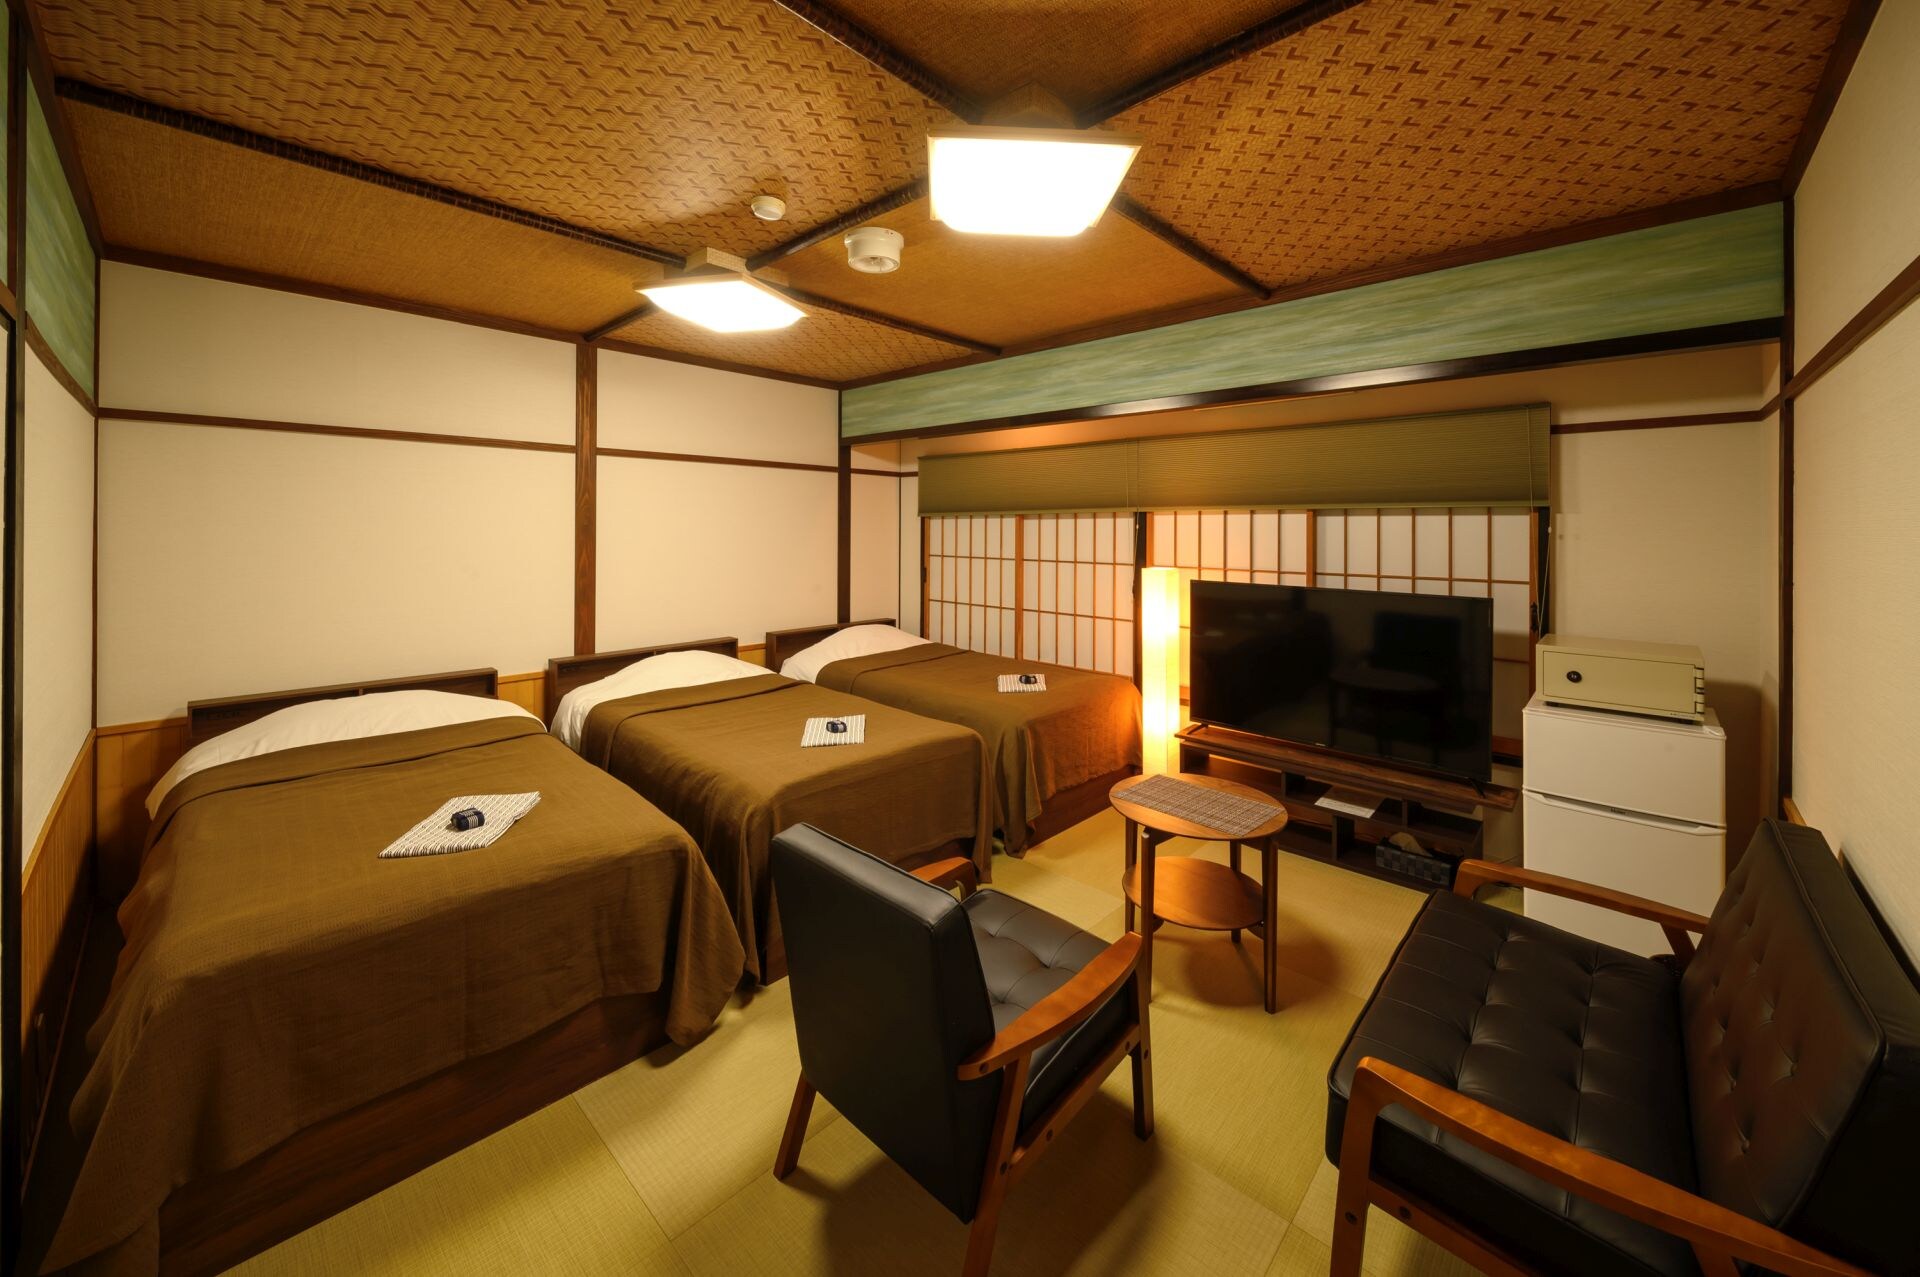 Triple room 12 tatami mats